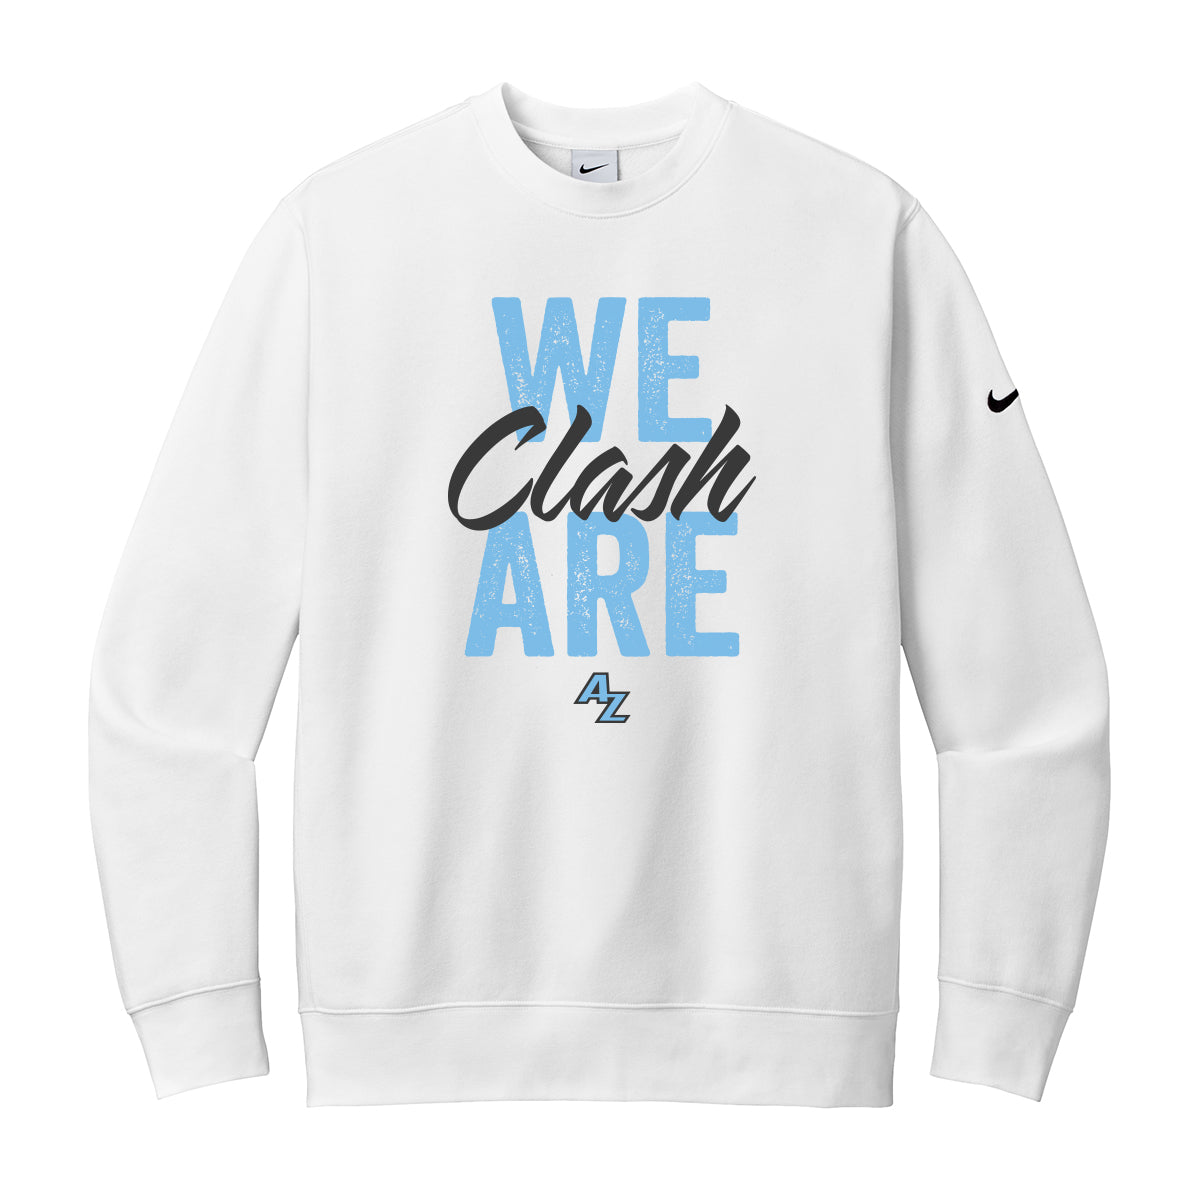 We are Clash Nike Crewneck Sweatshirt